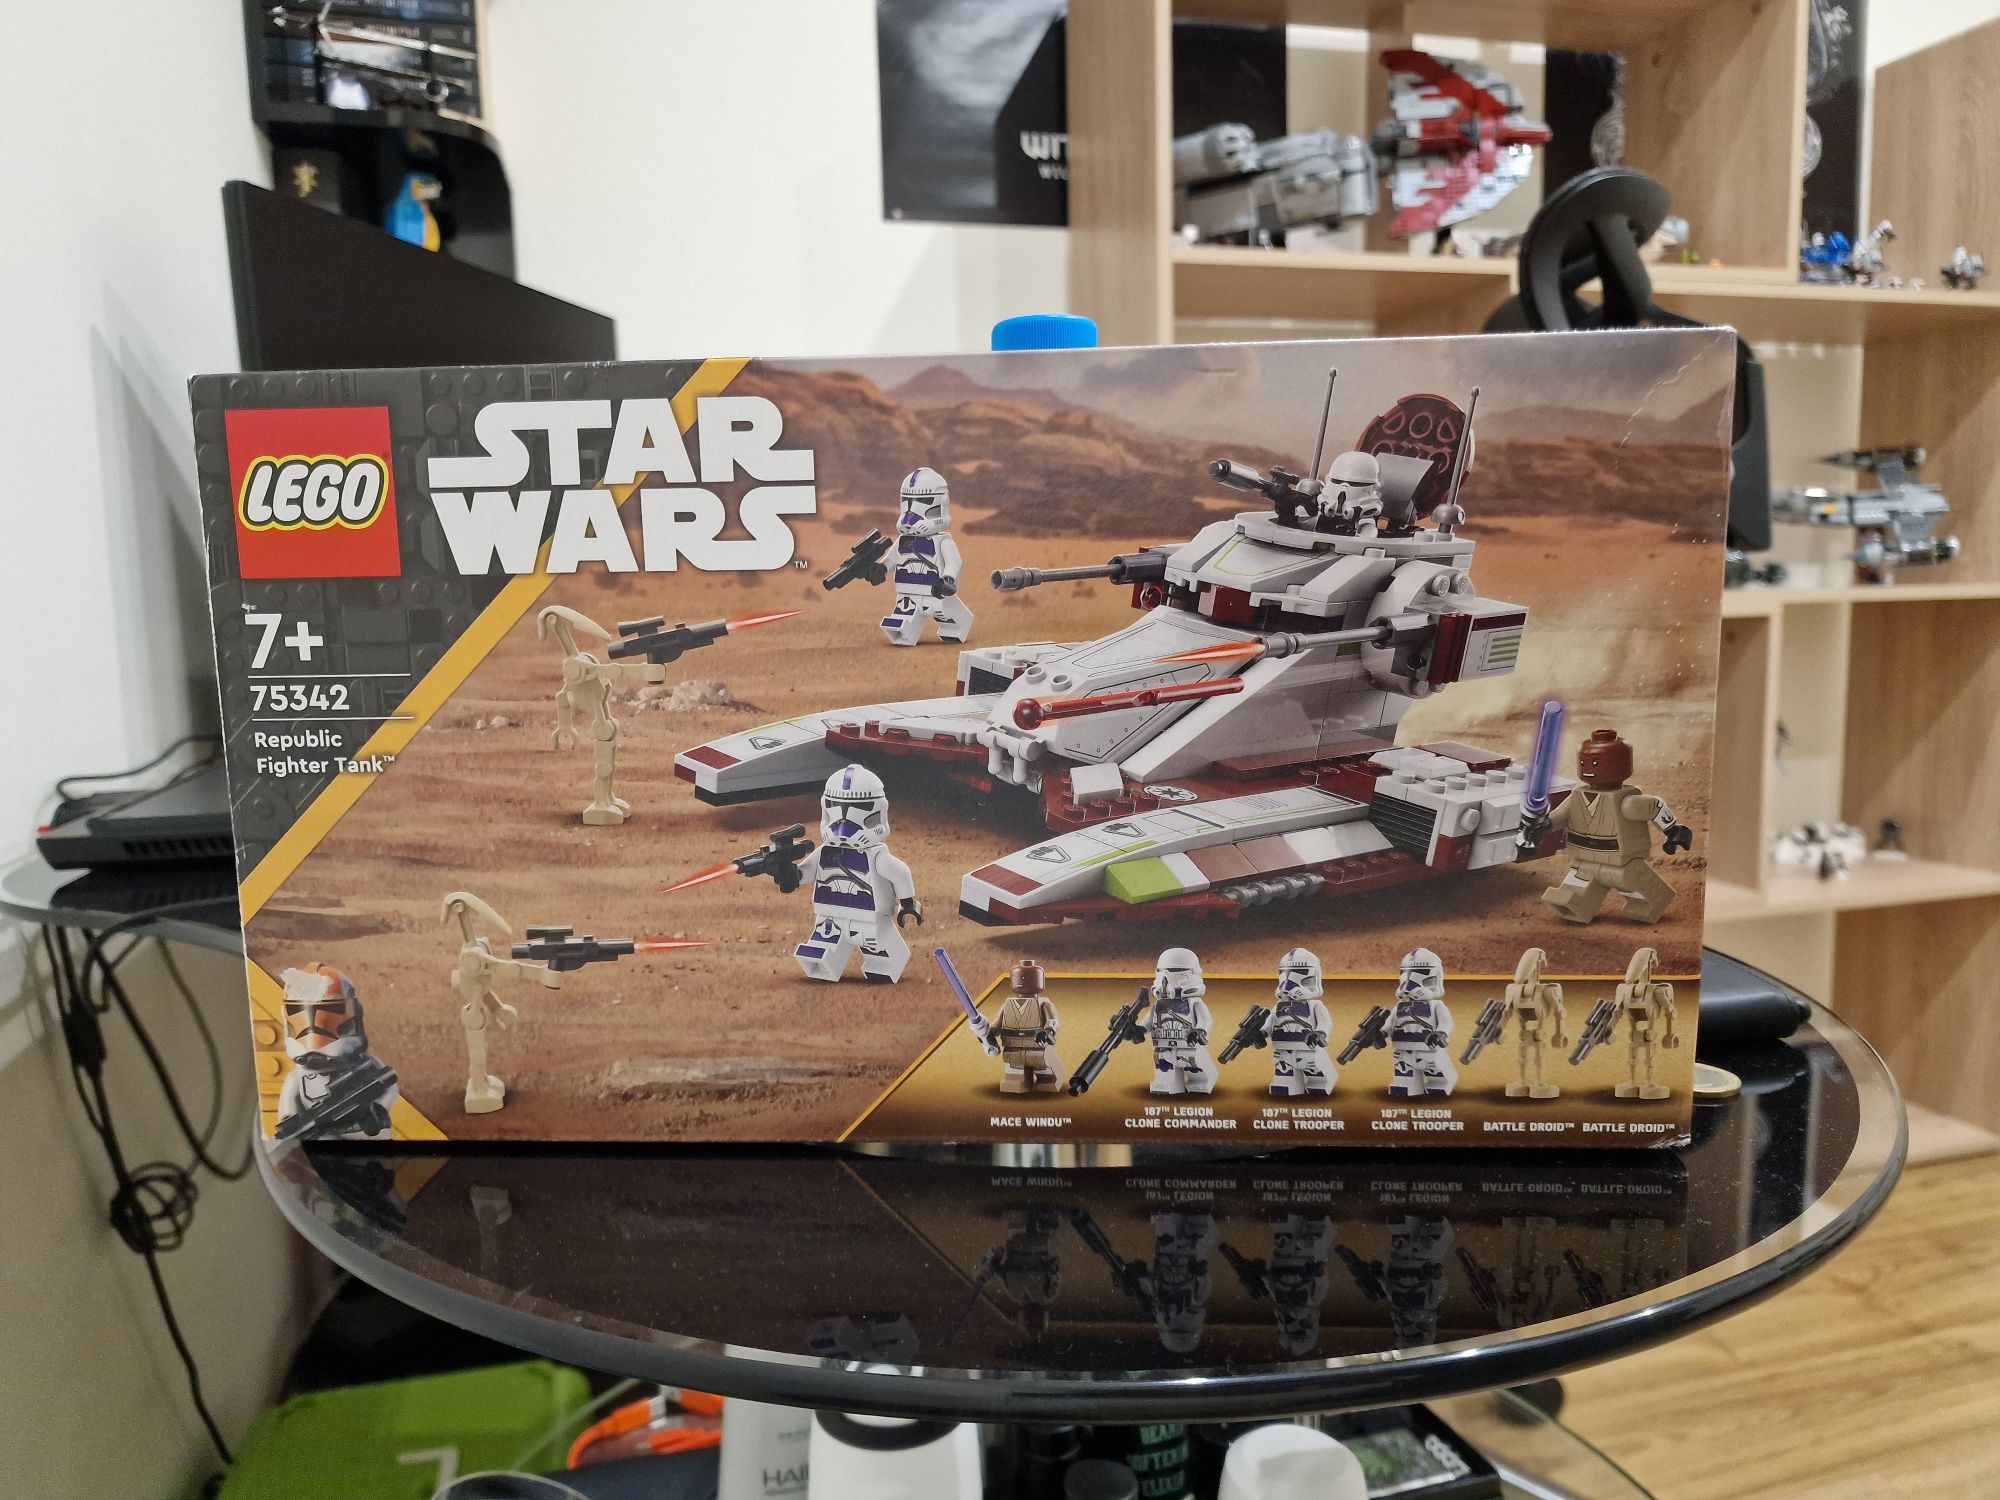 Lego Star Wars 75342 - Republic figter tank